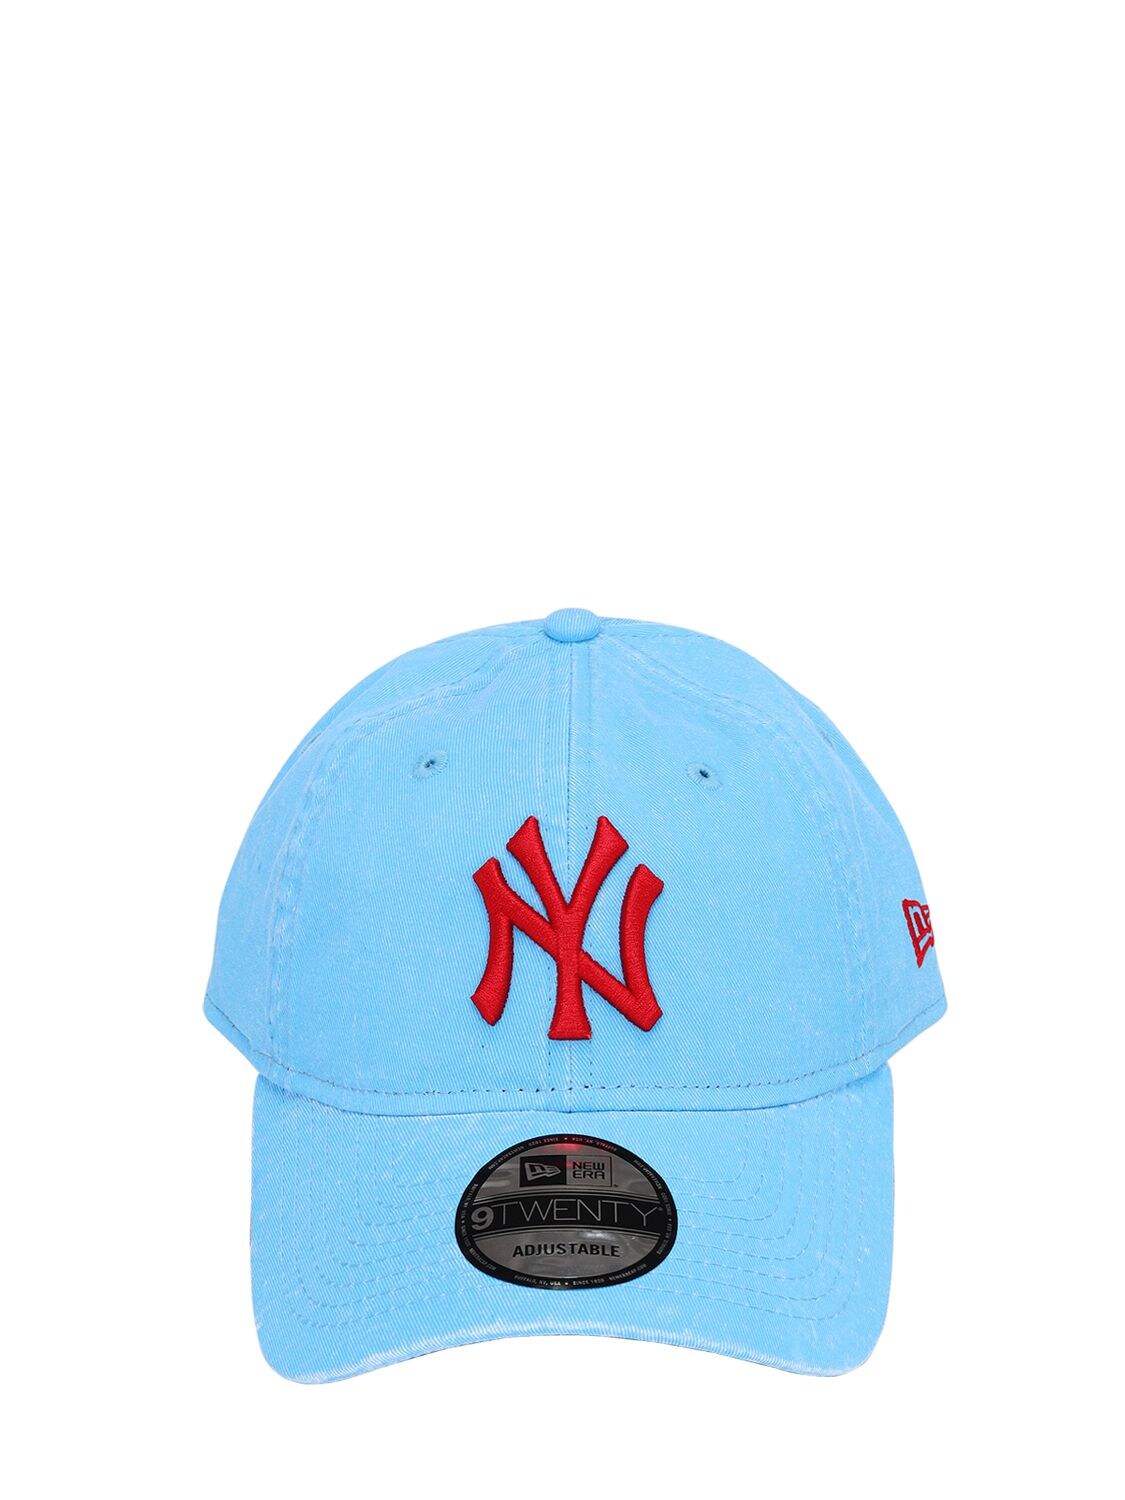 New Era Mlb 920 Ny Yankees Cotton Baseball Hat In Light Blue